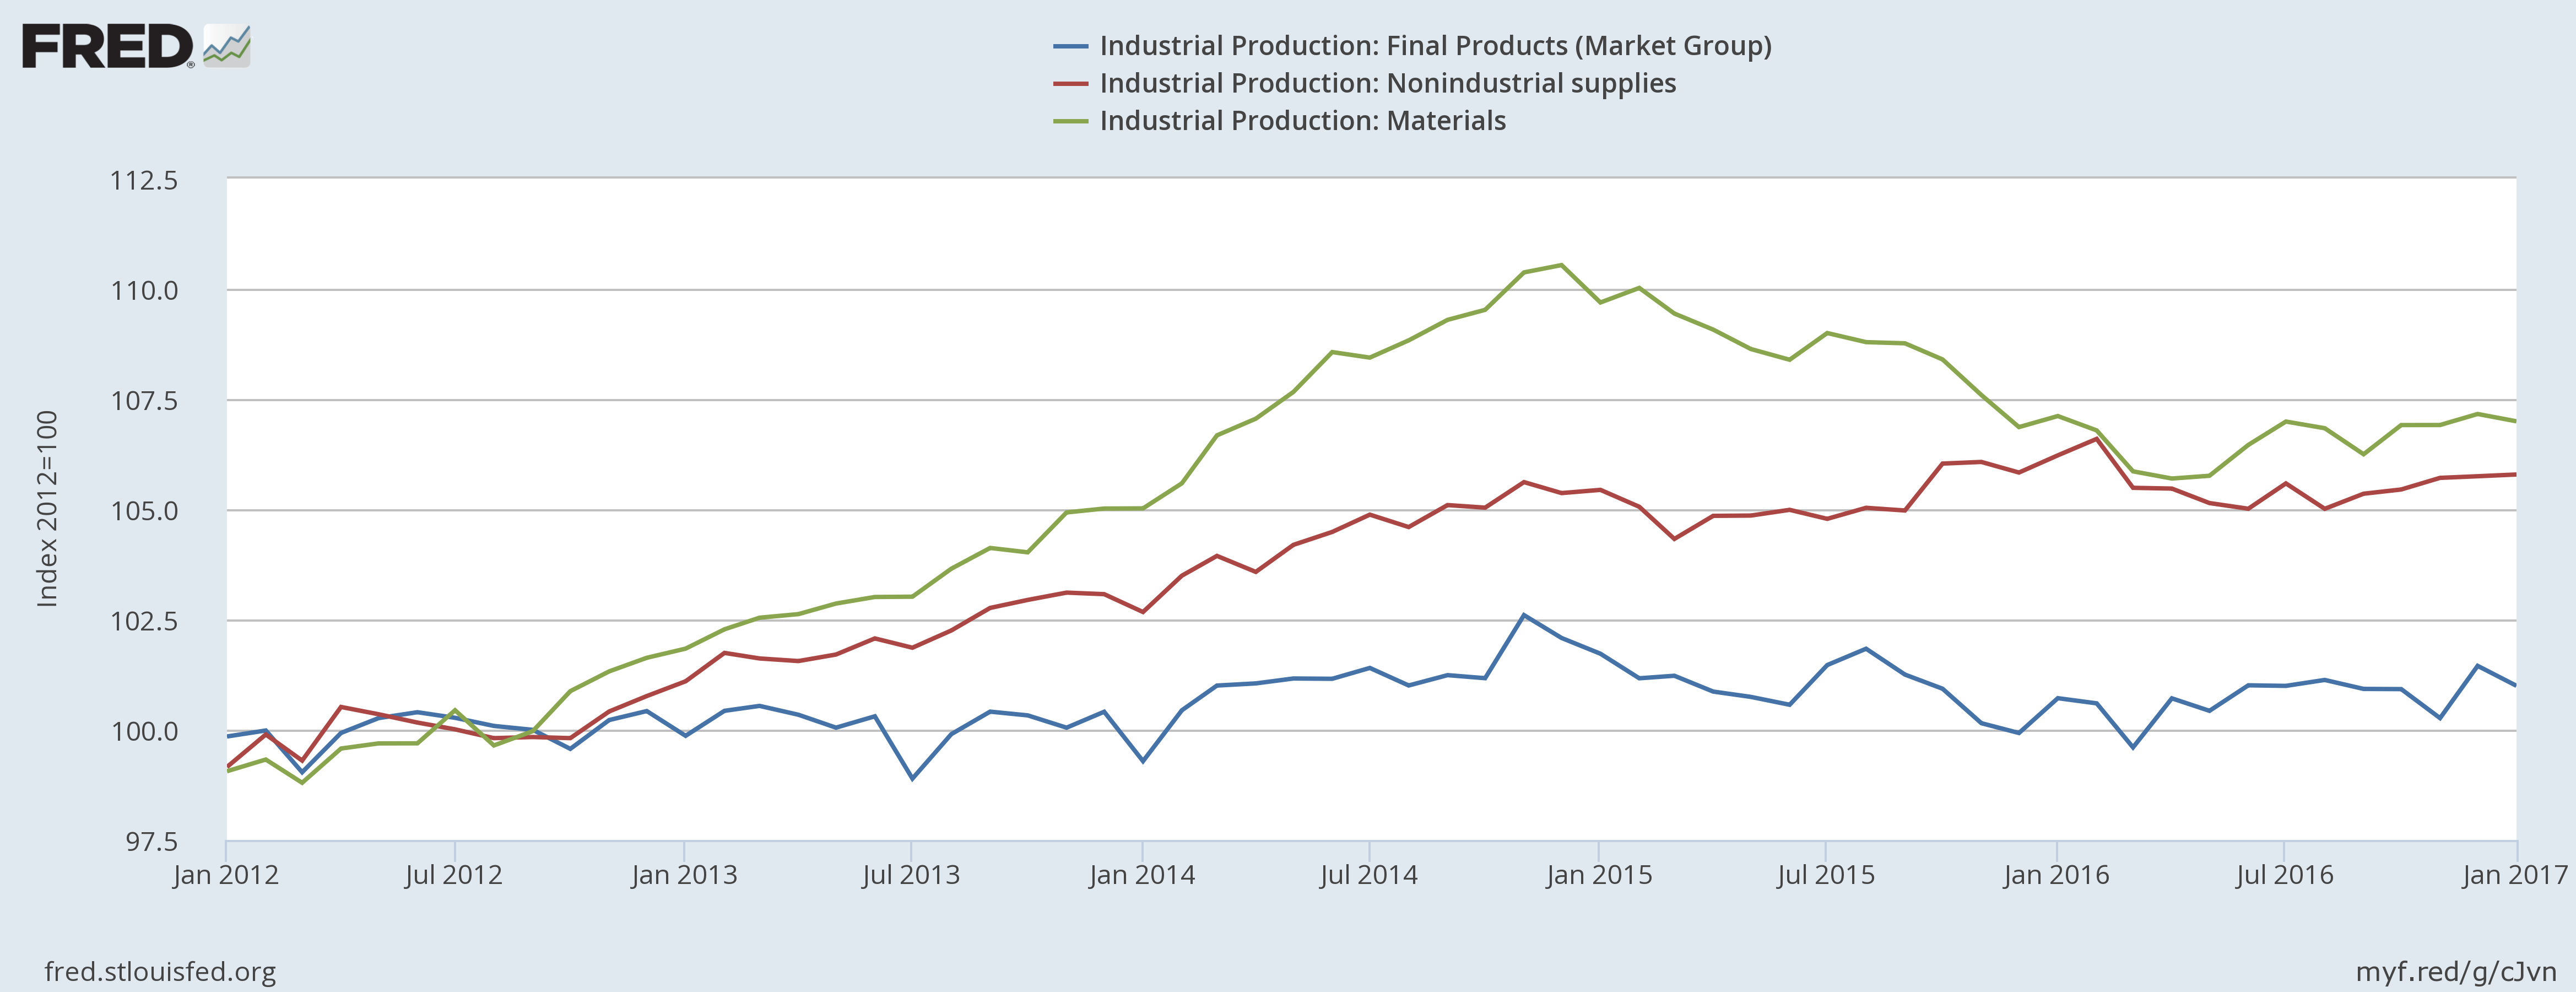 Industrial Production II